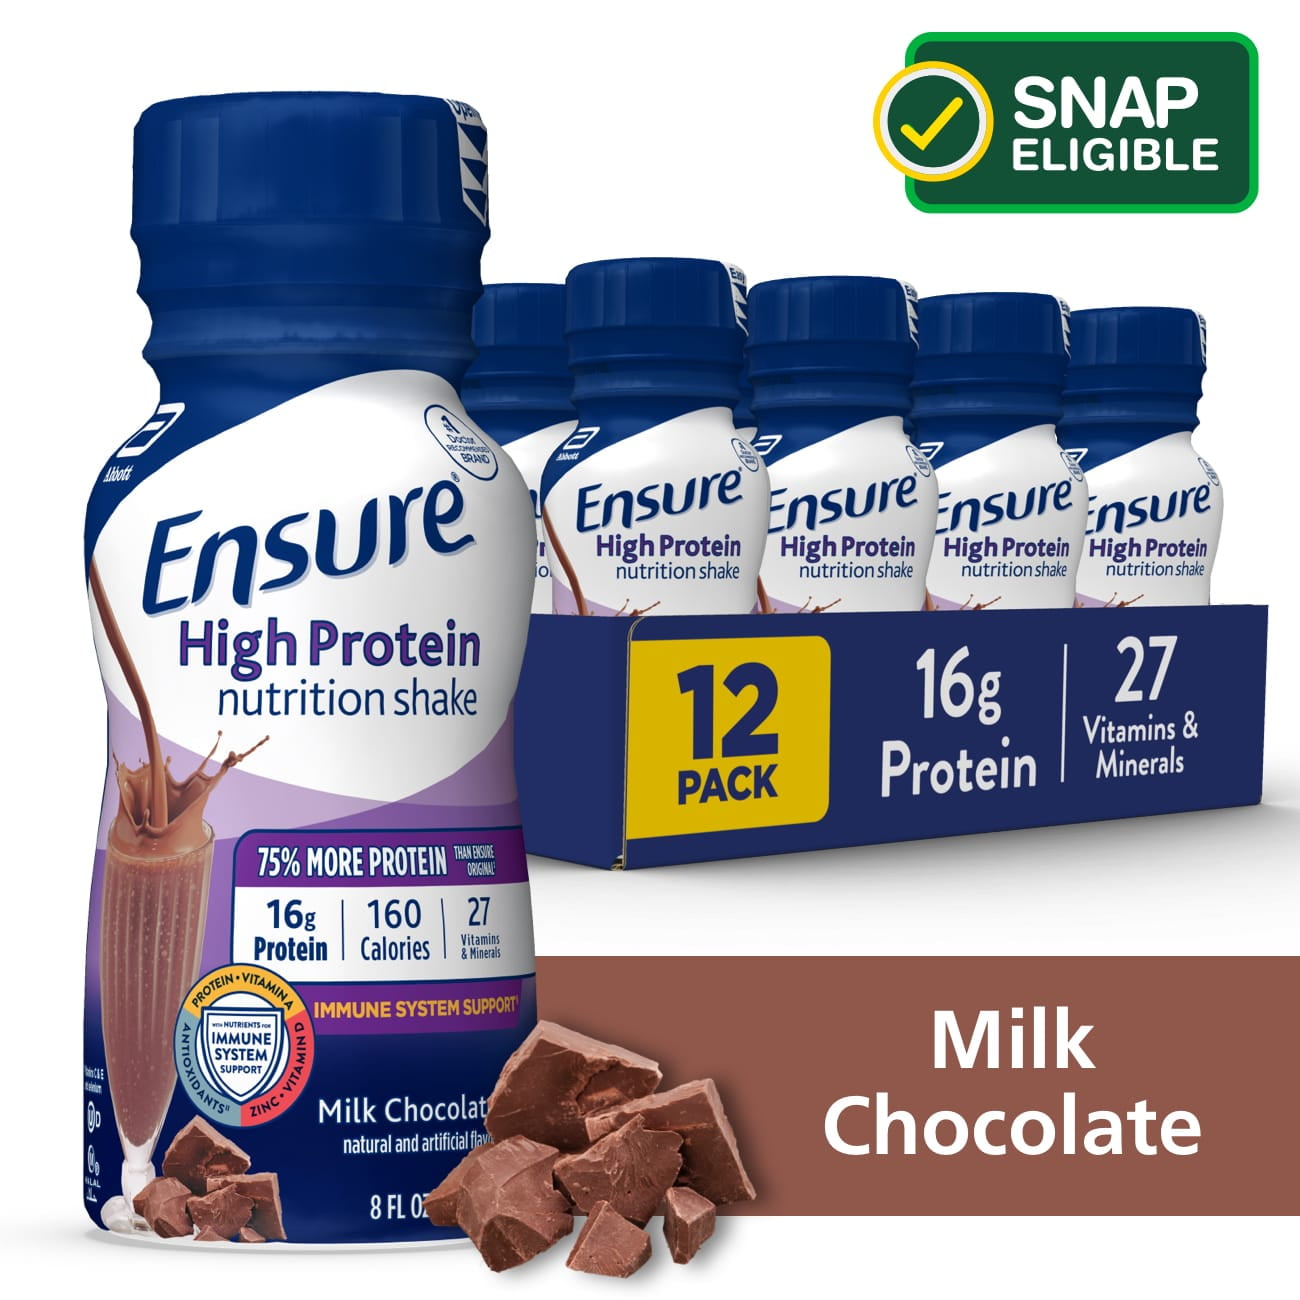 Ensure High Protein Nutrition Shake, Milk Chocolate, 8 fl oz, 12